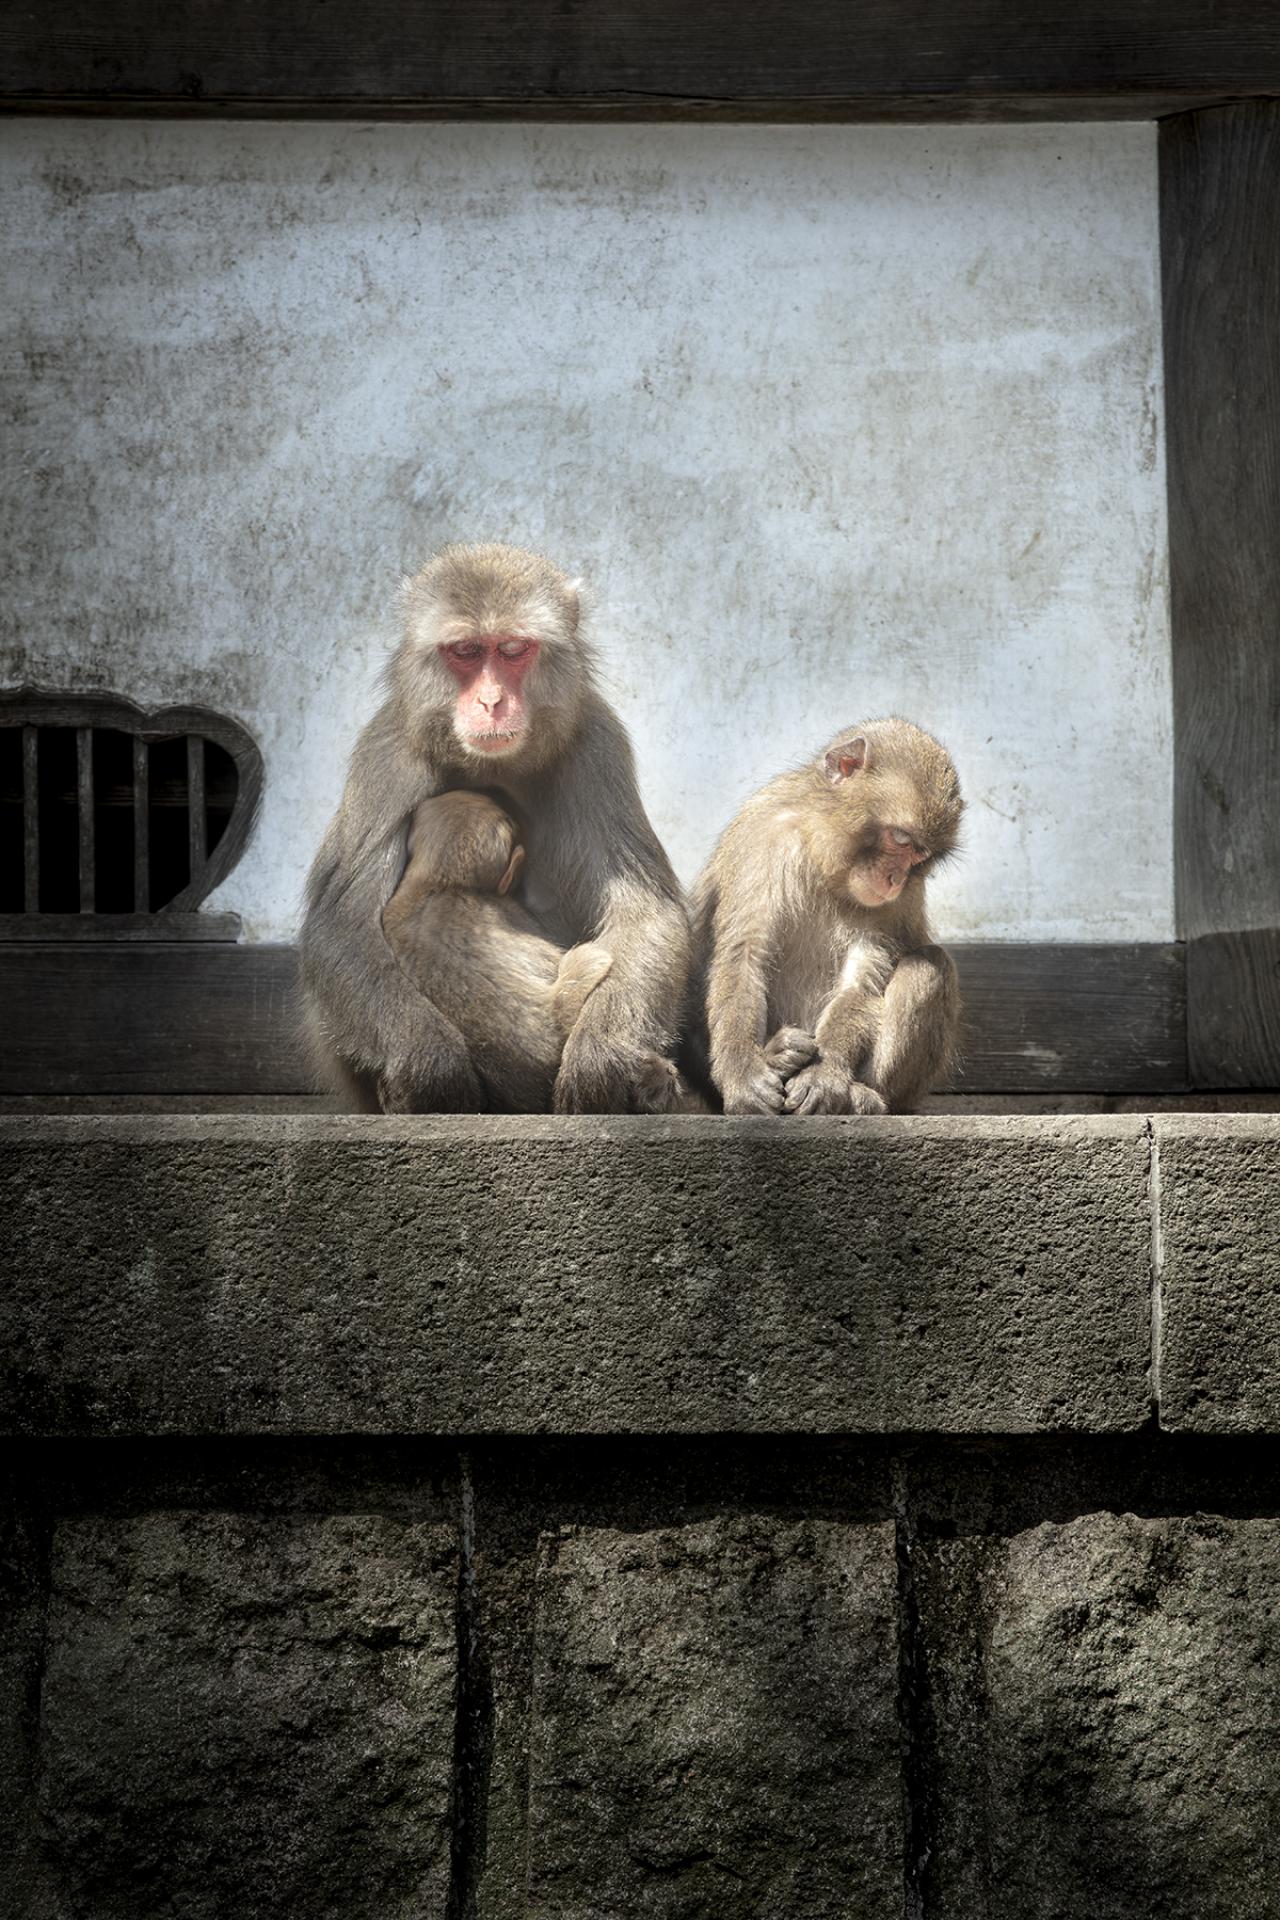 London Photography Awards Winner - Temple and Monkeys